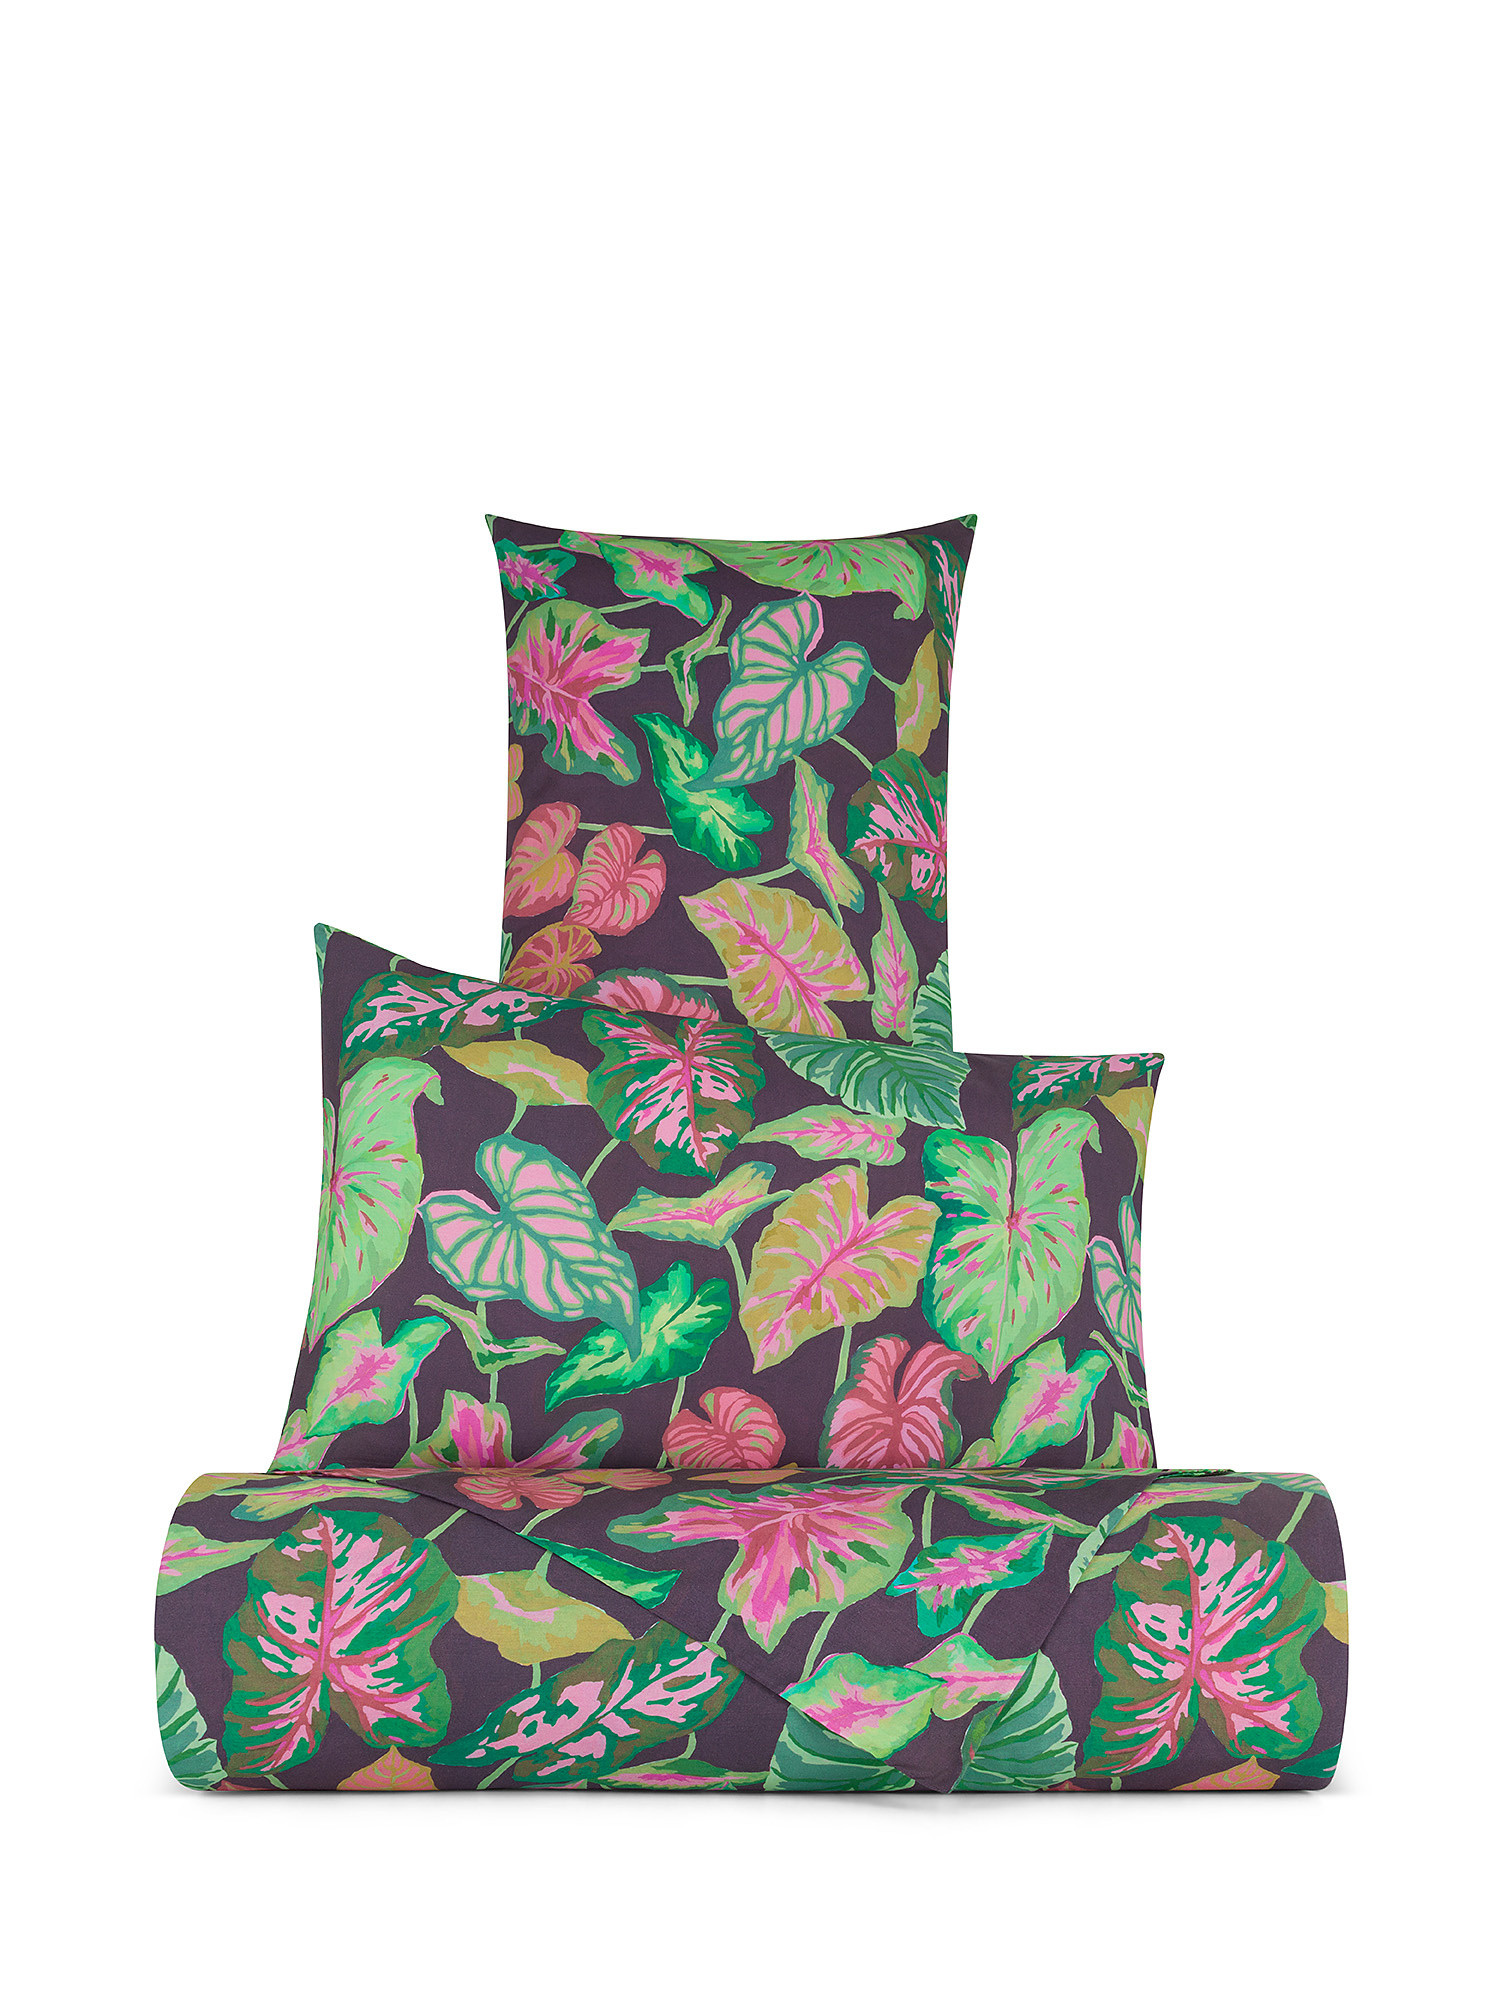 Leaf print cotton percale duvet cover set, Multicolor, large image number 0